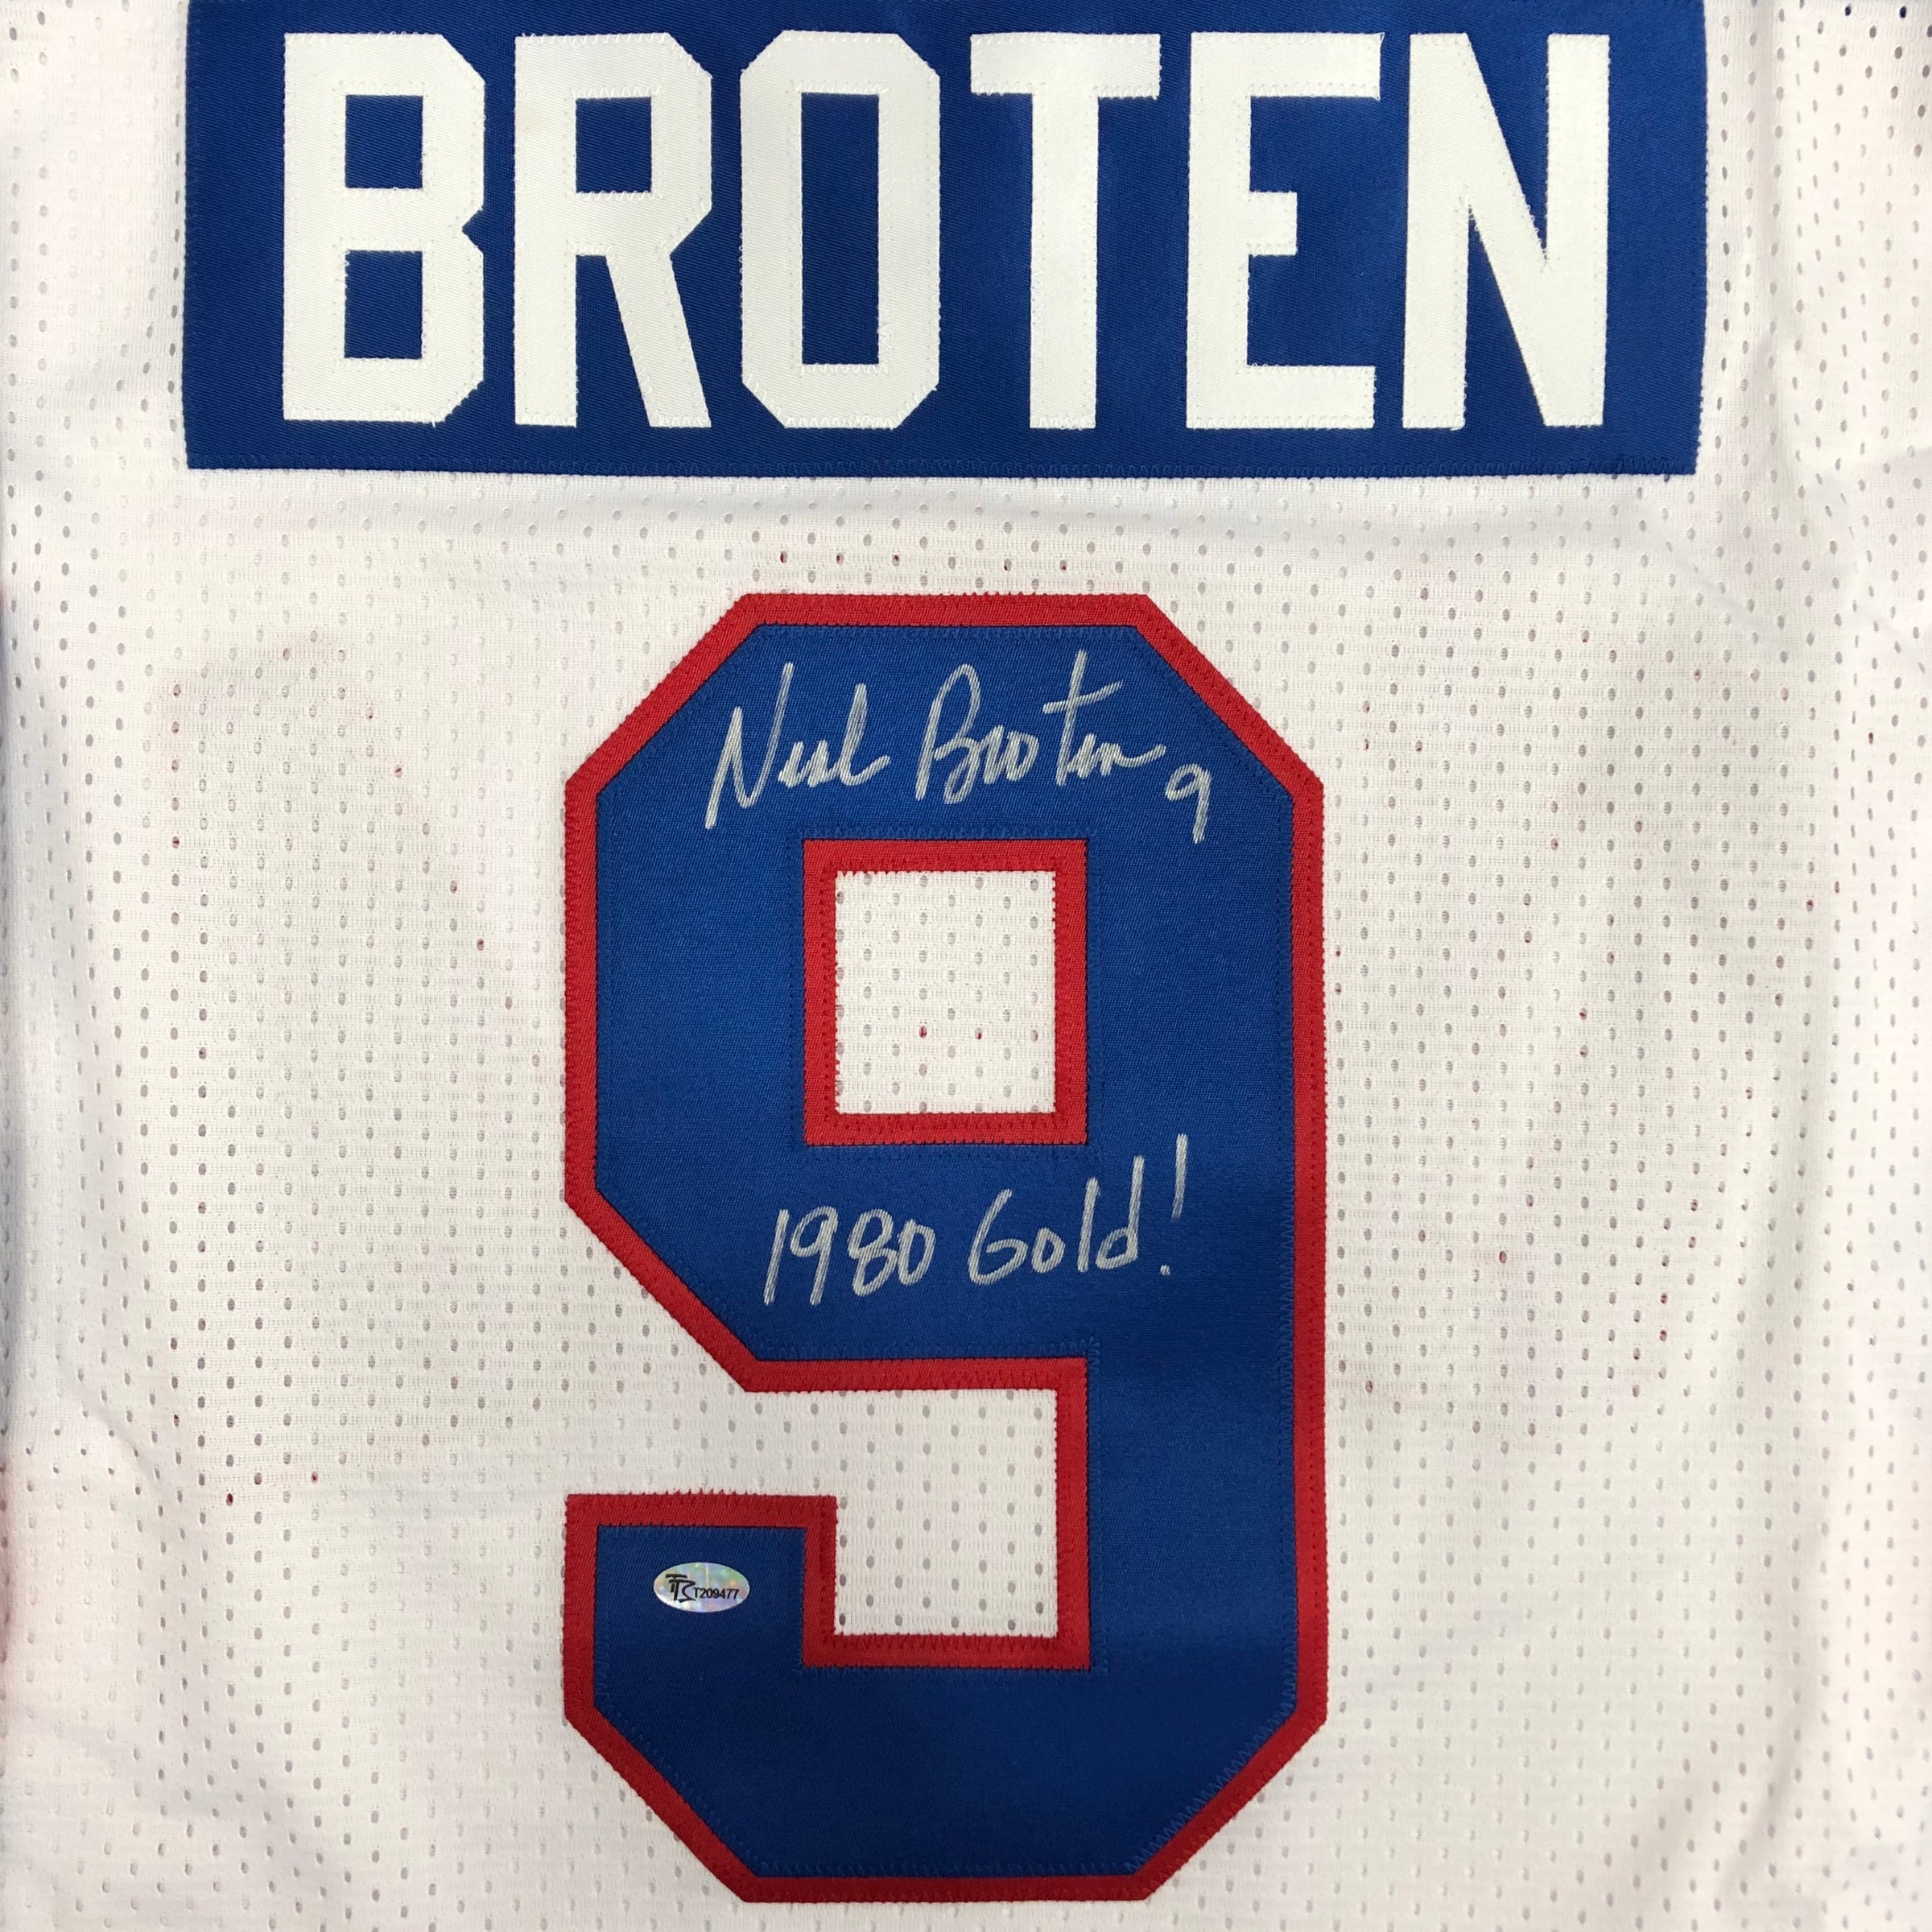 Neal Broten Team USA Autographed Hockey Jersey White (JSA) — RSA